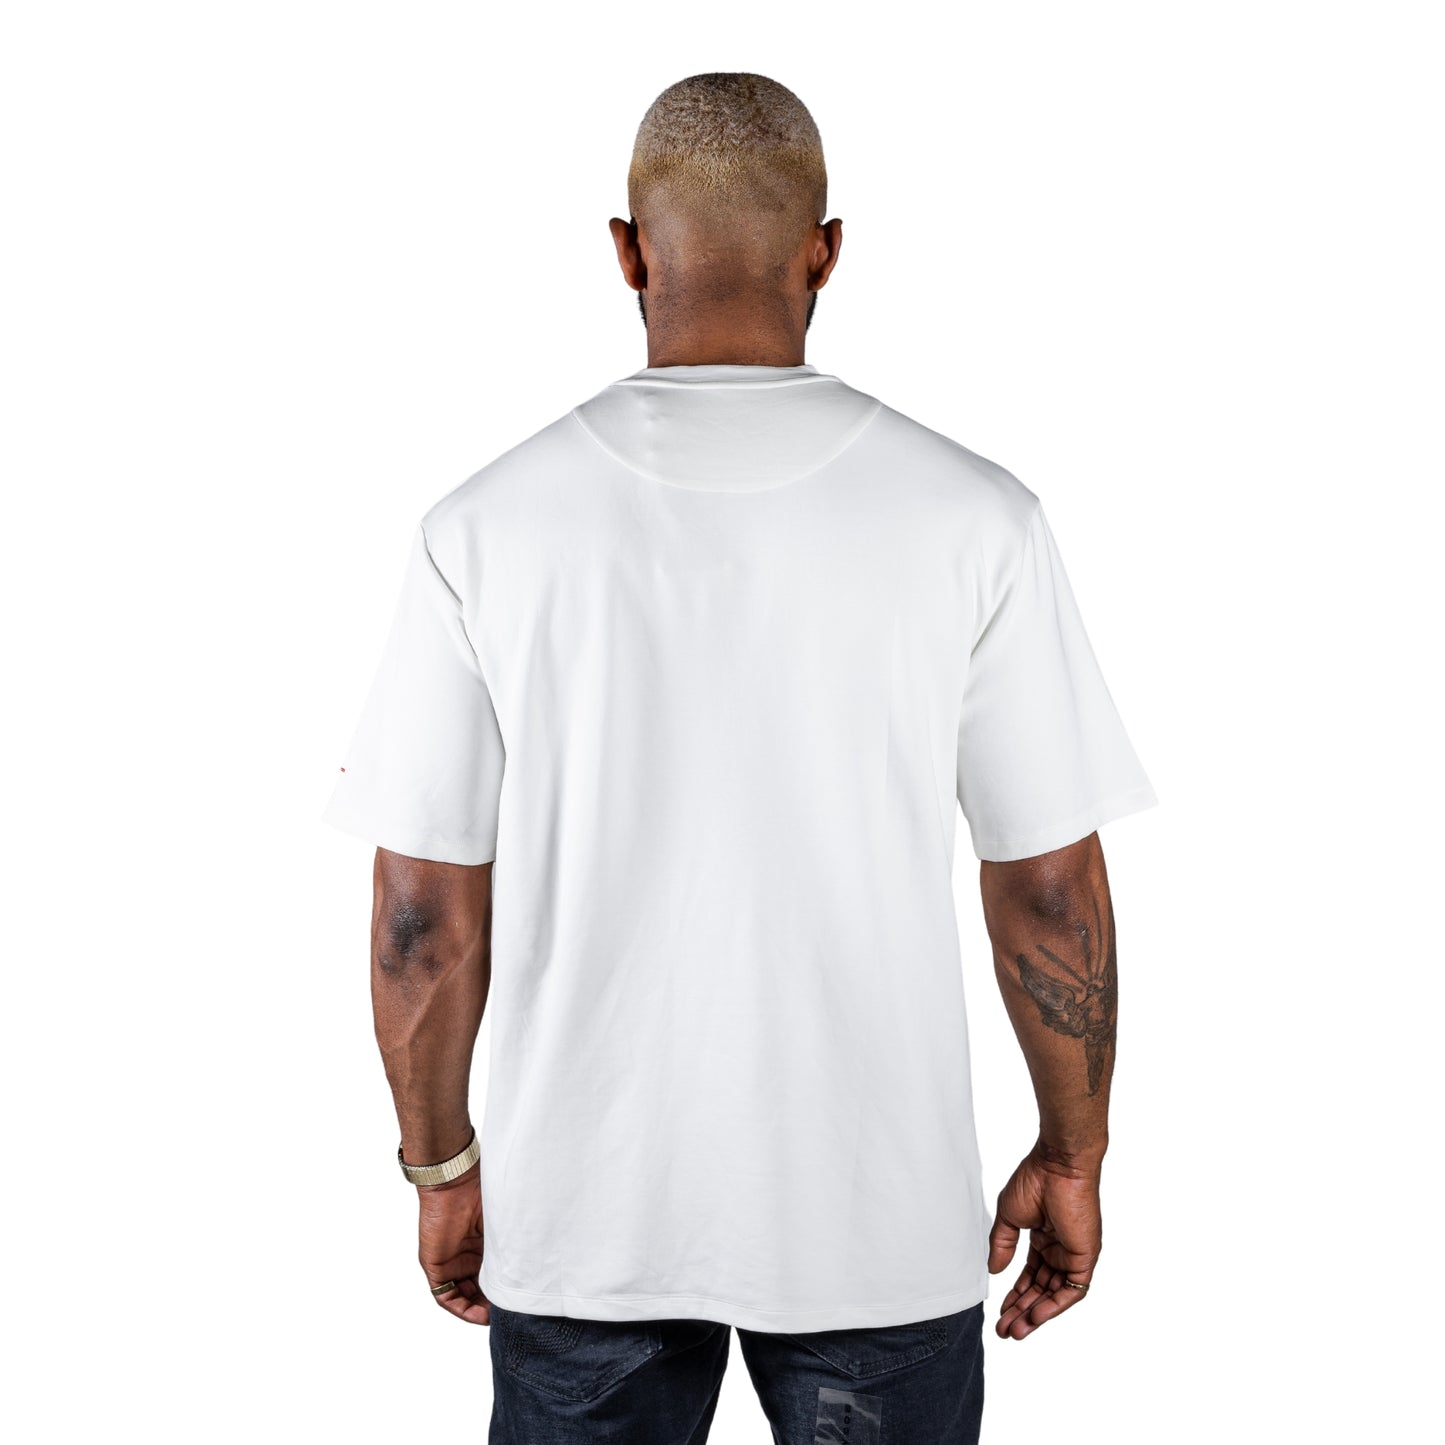 Bogart Premium Collection T-Shirt